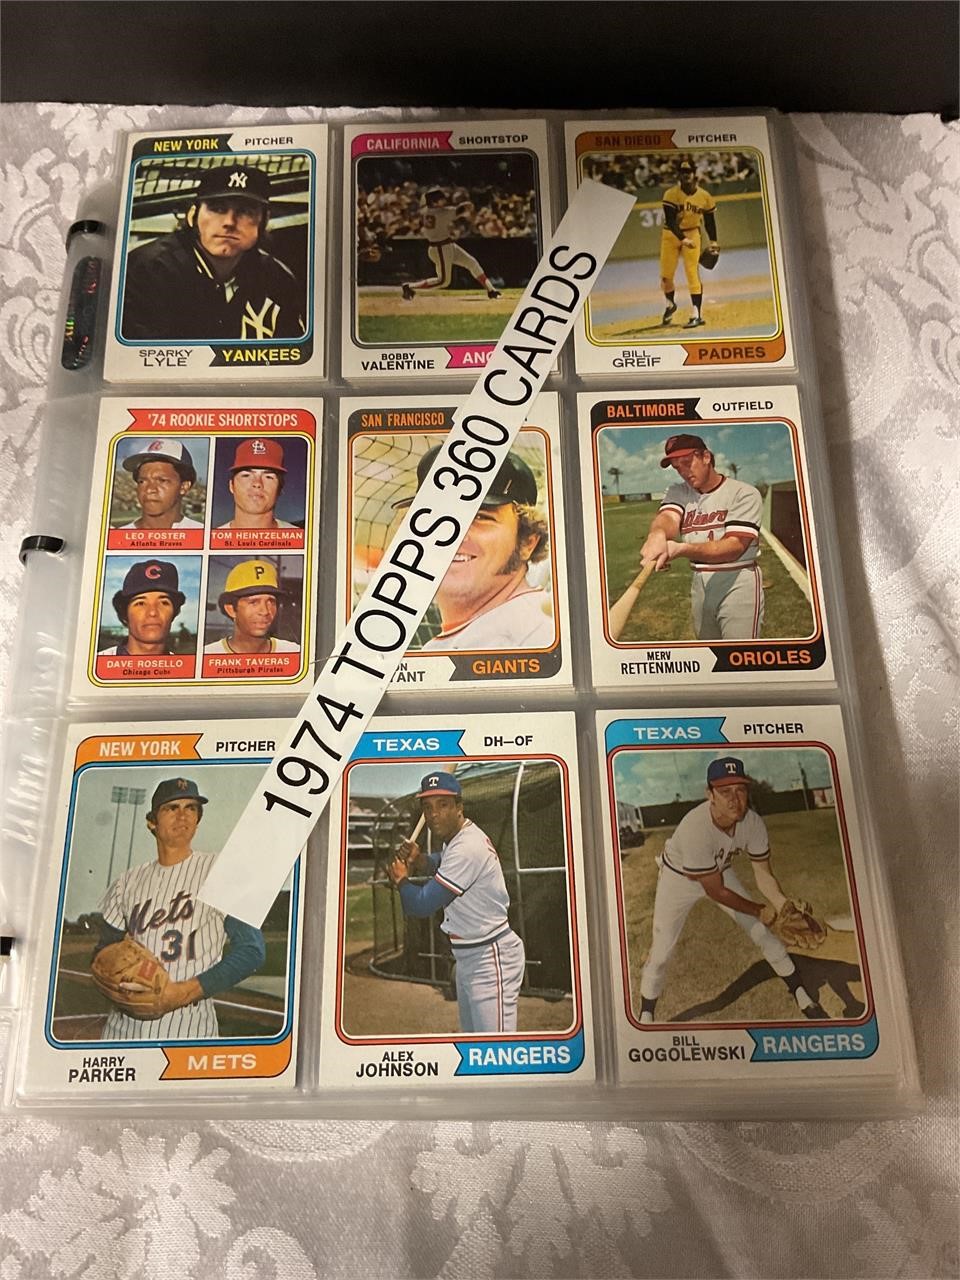 1974 Topps baseball cards in sleeves